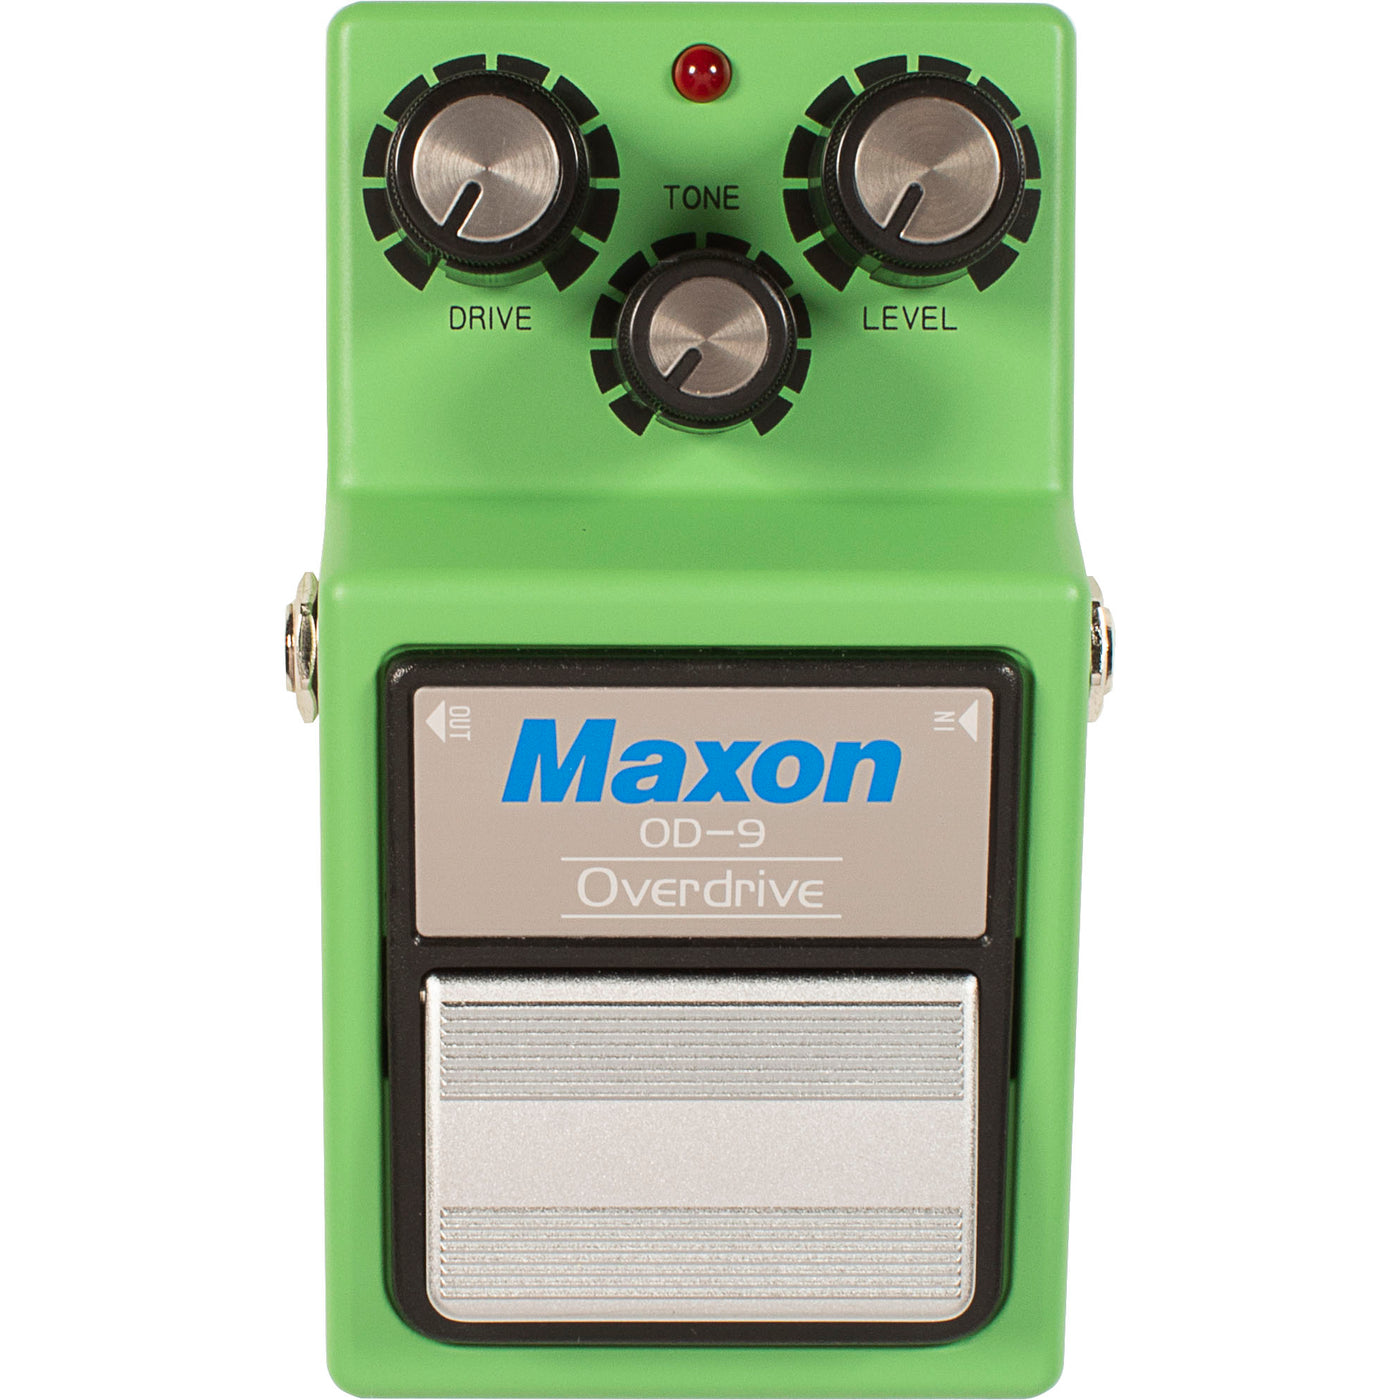 Maxon OD-9 Overdrive Pedal